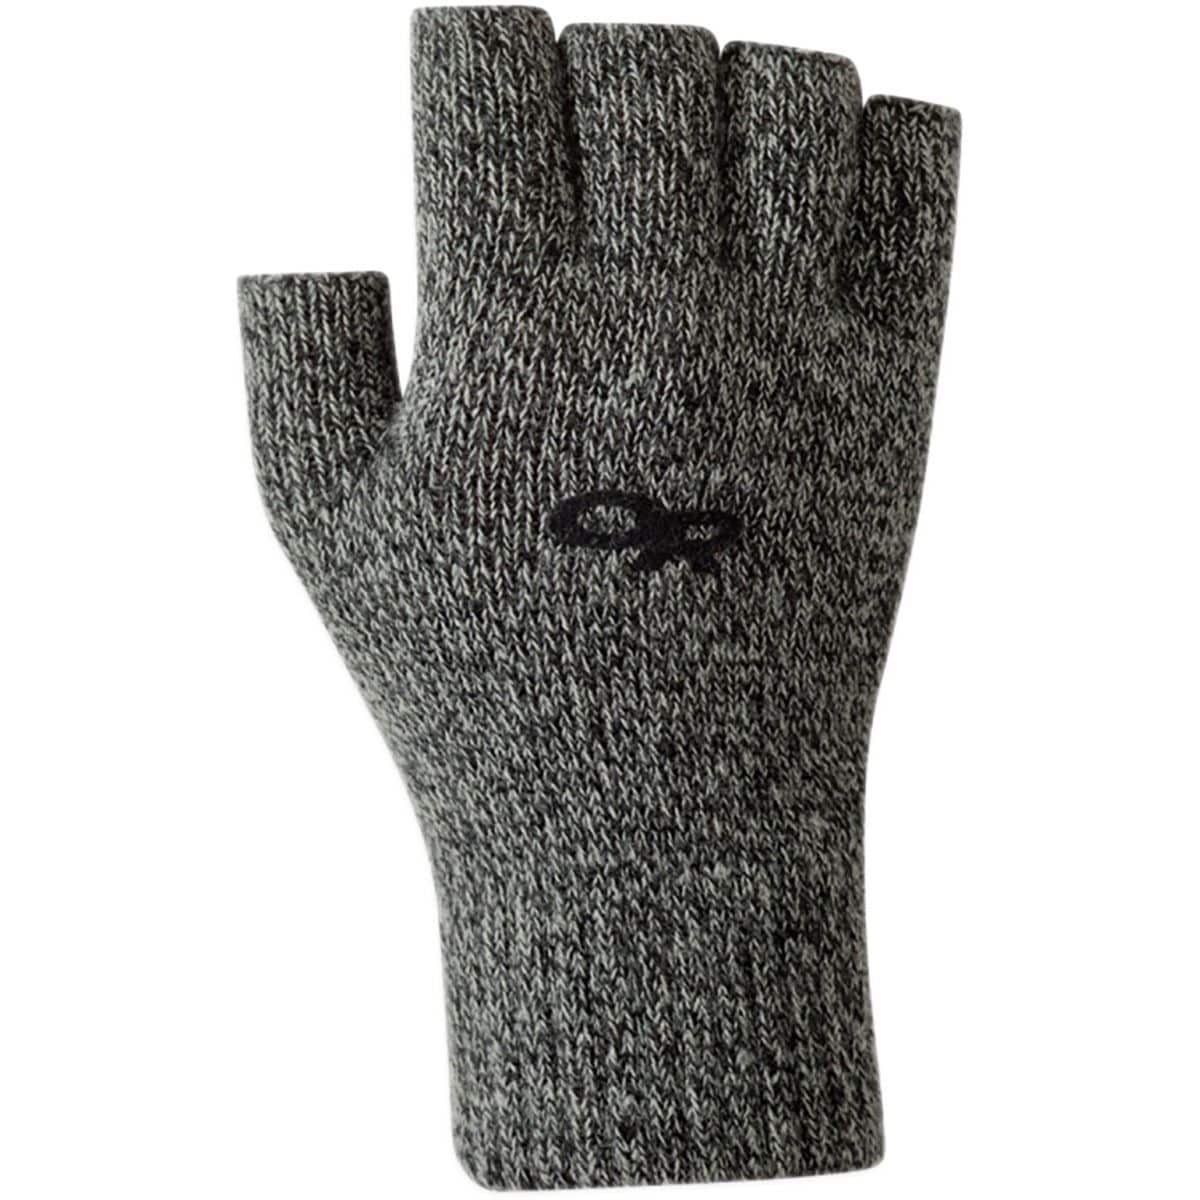 Outdoor Research Fairbanks Fingerless Glove - Men's